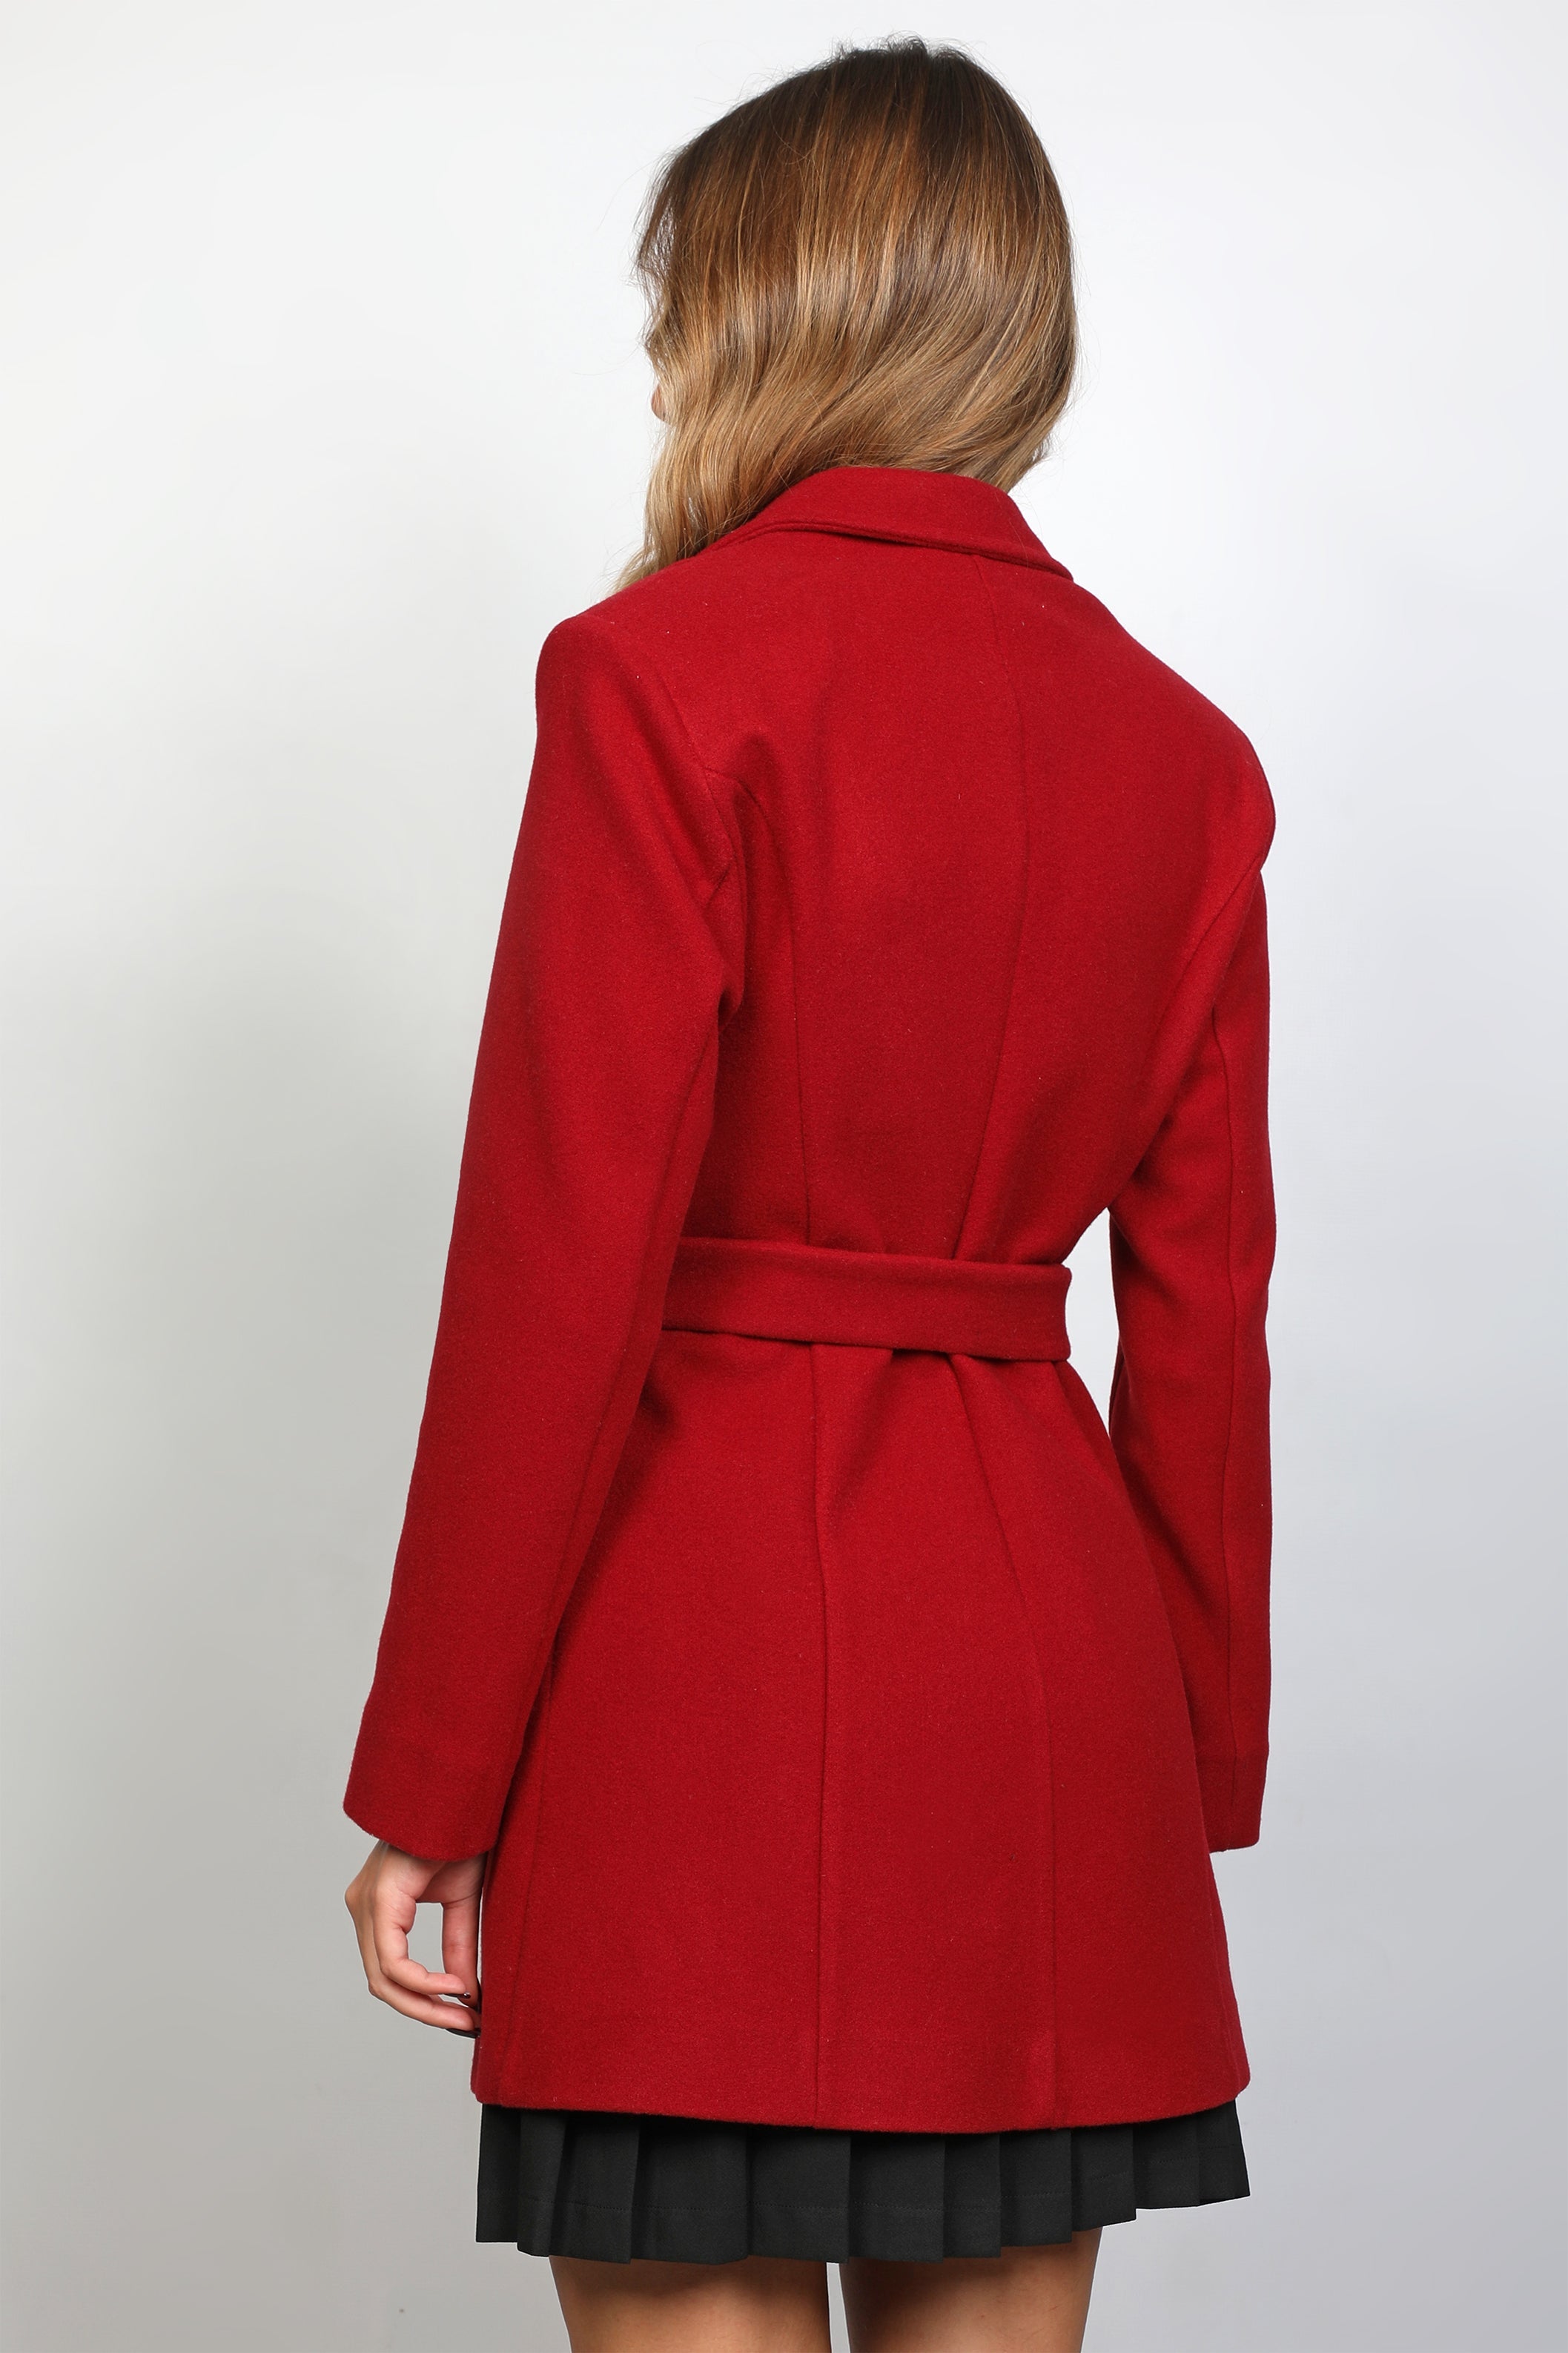 Classy Women Red Coat